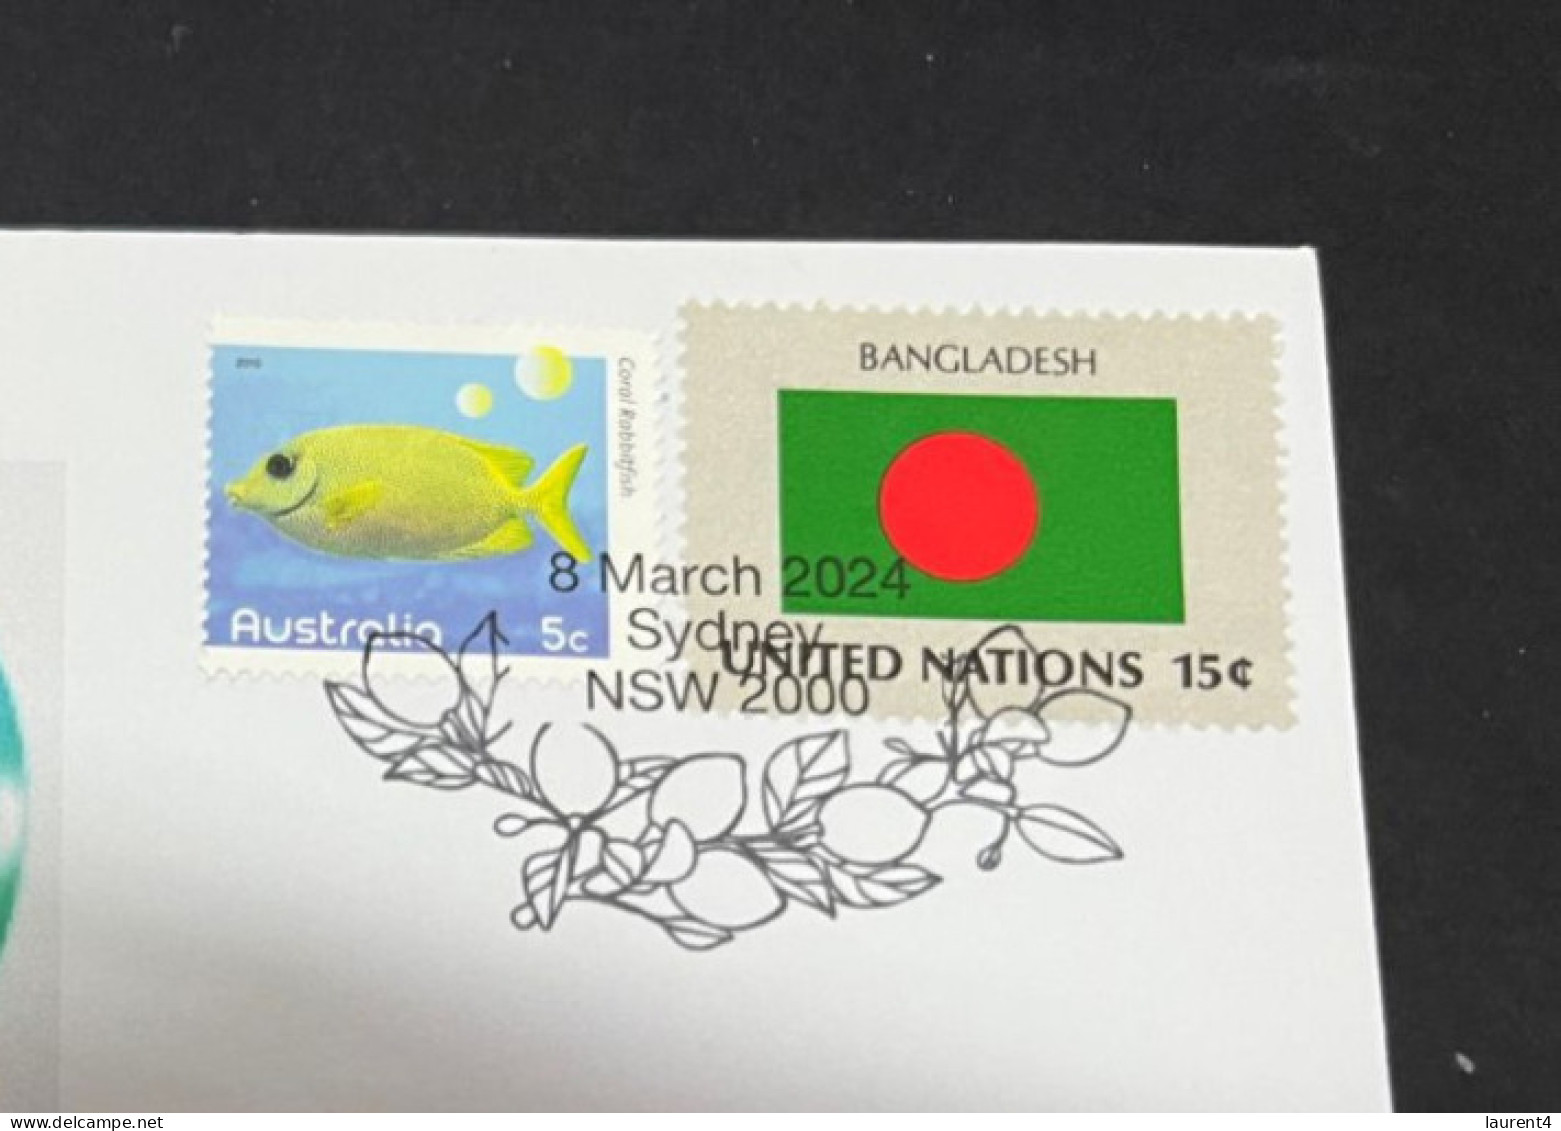 8-3-2024 (2 Y 27) COVID-19 4th Anniversary - Bangladesh - 8 March 2024 (with Bangladesh UN Flag Stamp) - Malattie